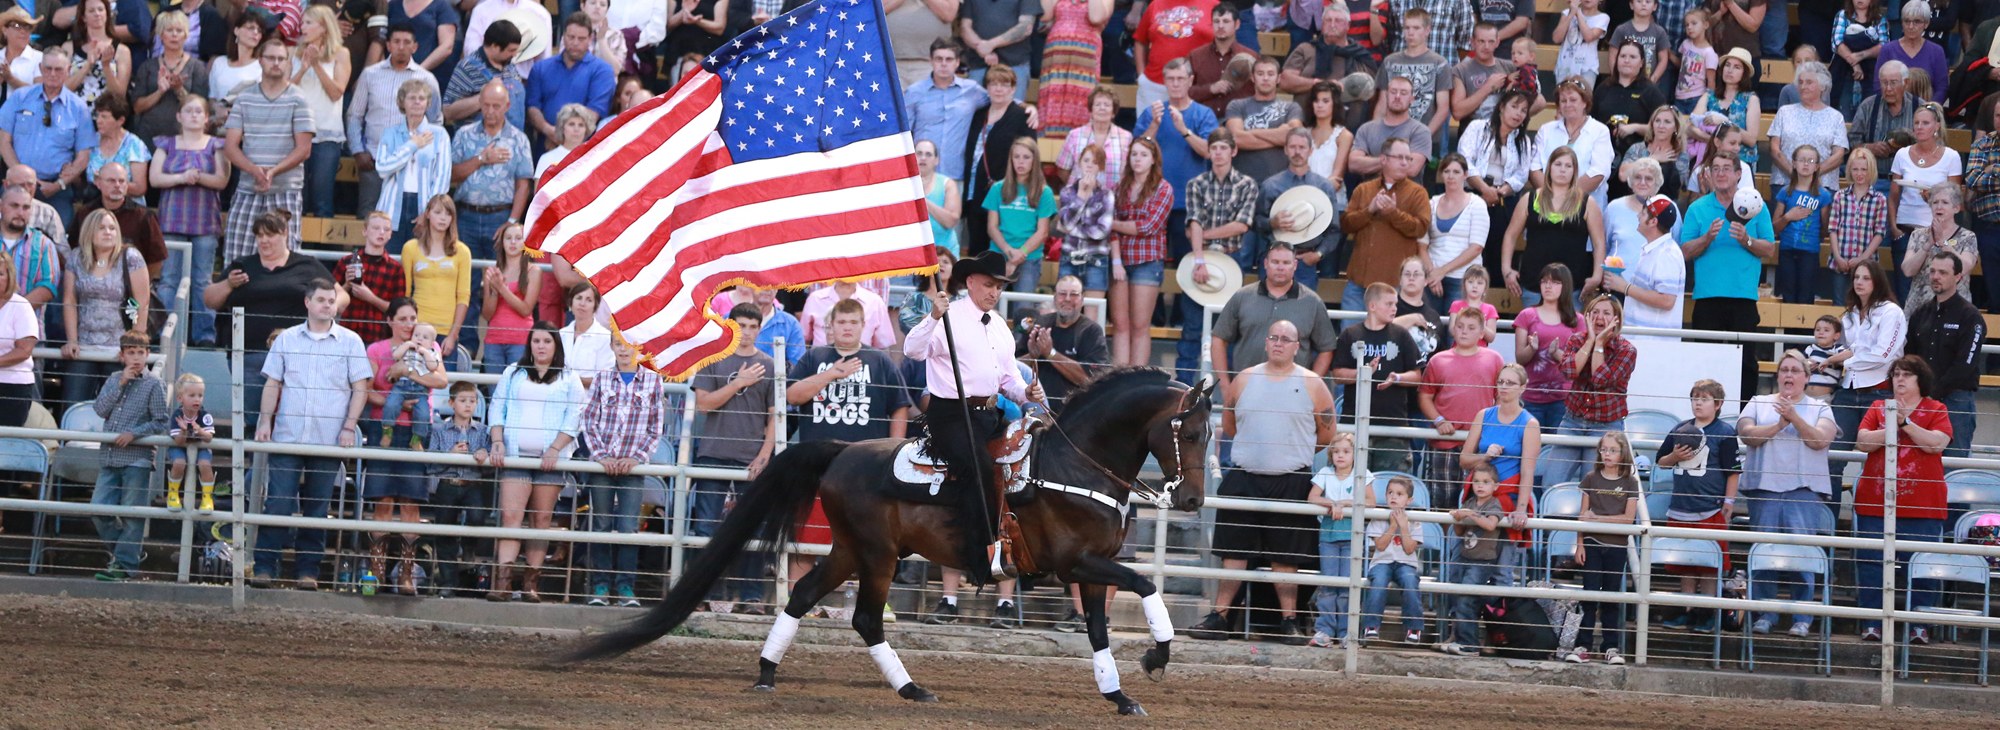 Morgan and Rider holding the USA flag